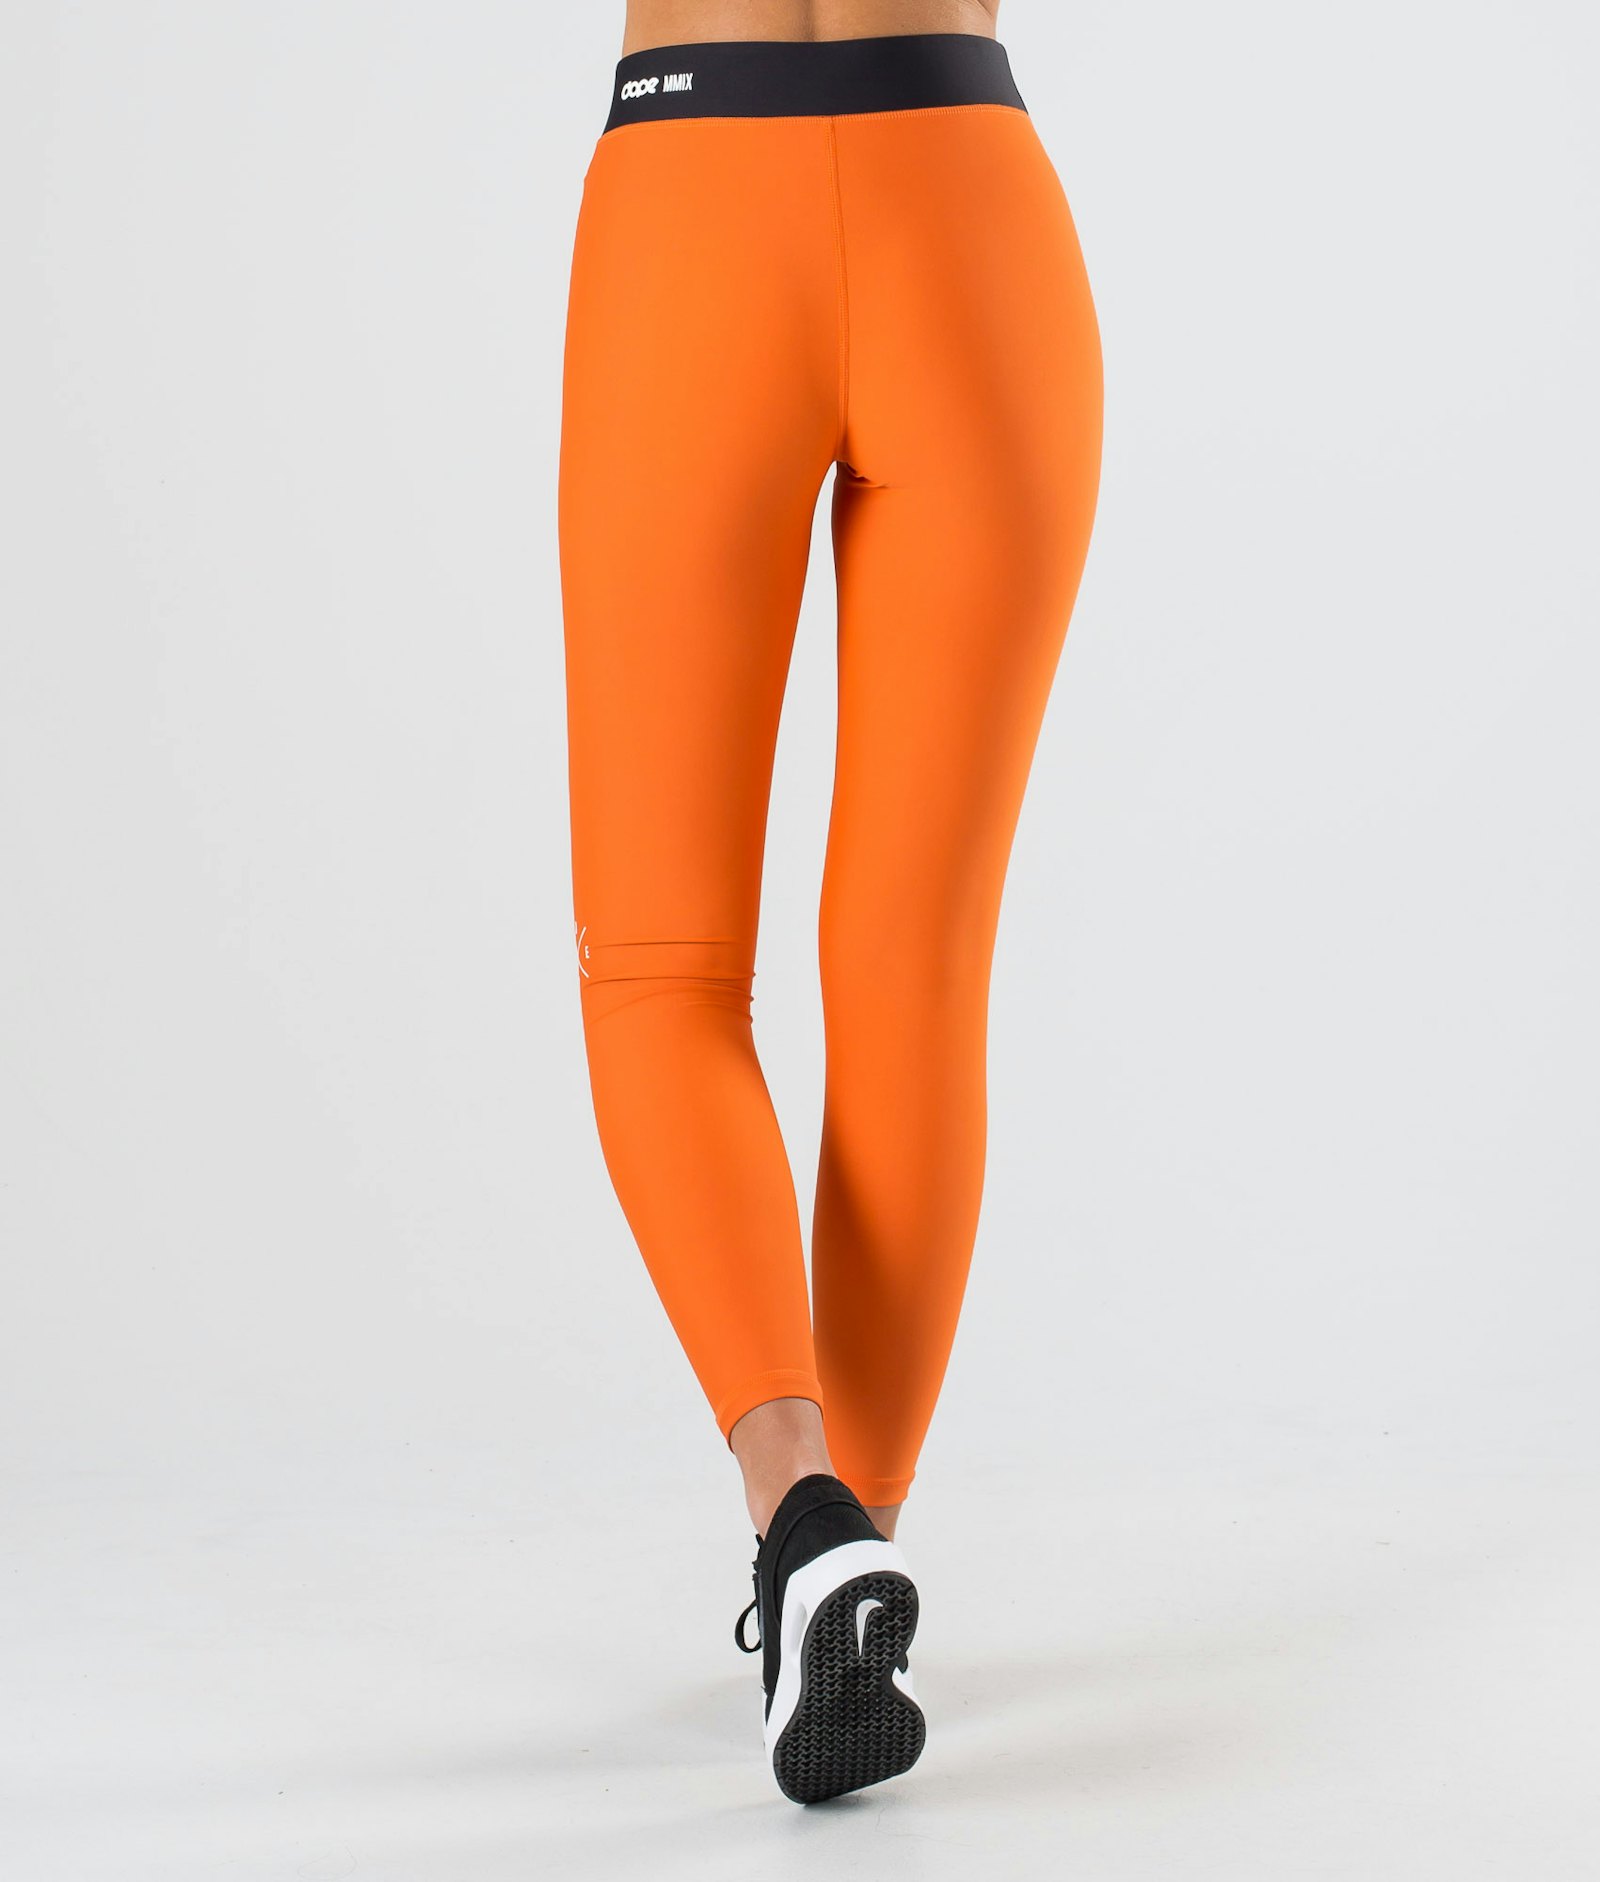 Razor Leggings Femme Faded Orange